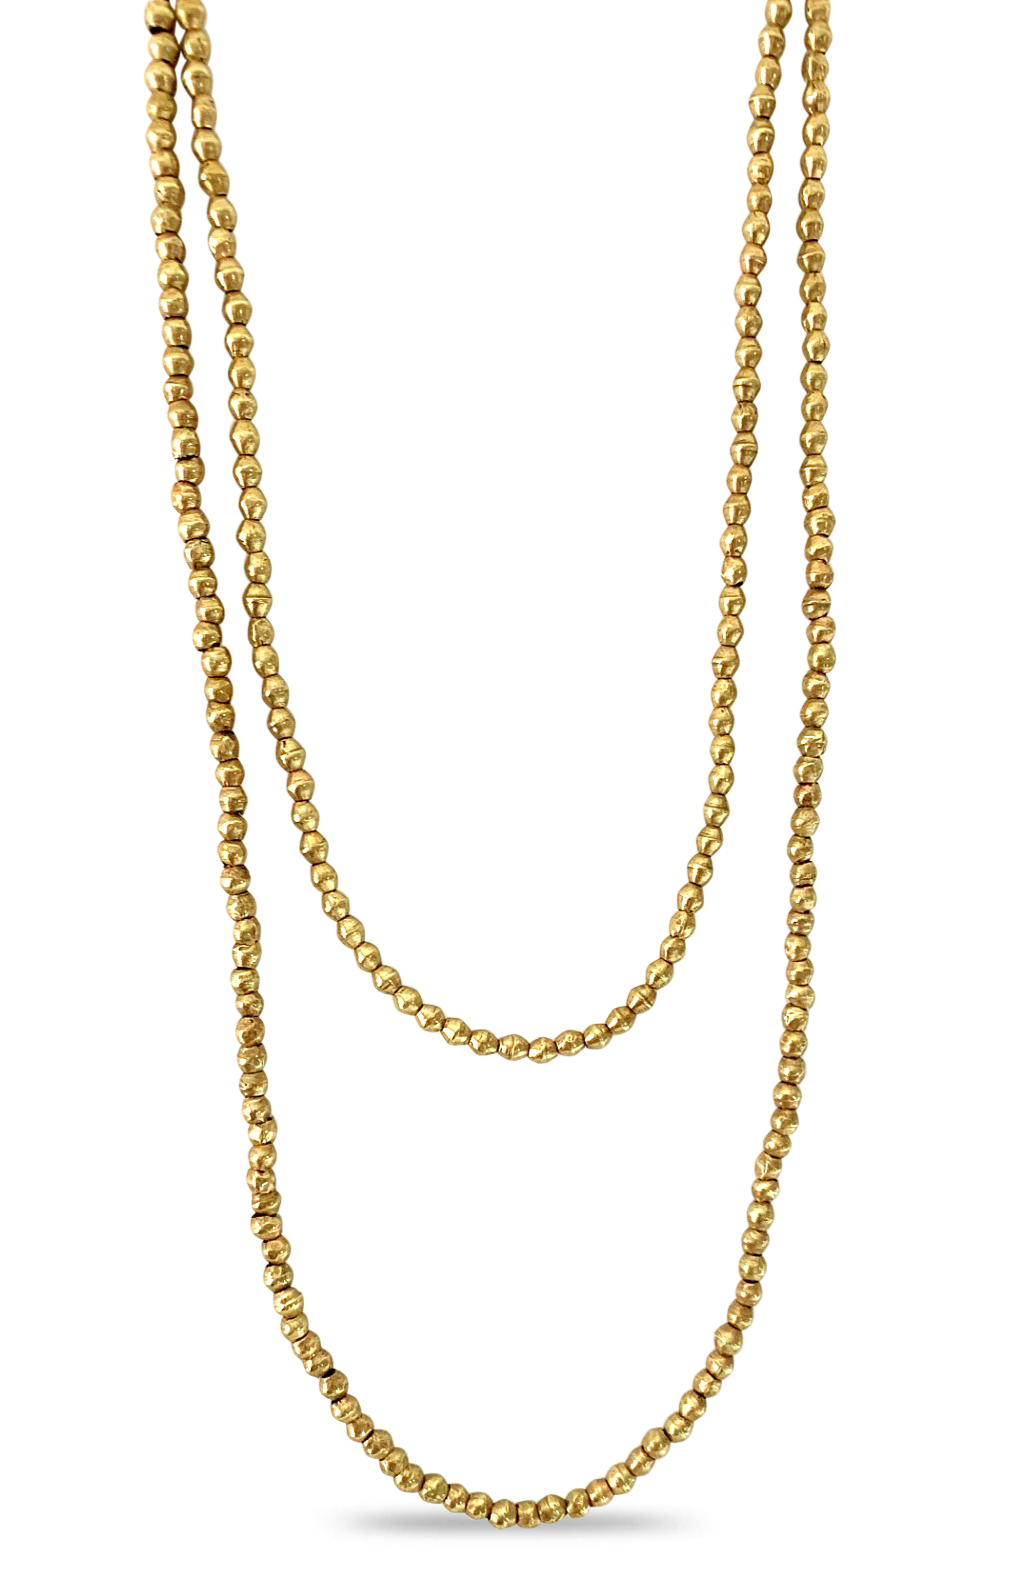 African Trade Bead Necklace & Wrap Bracelet